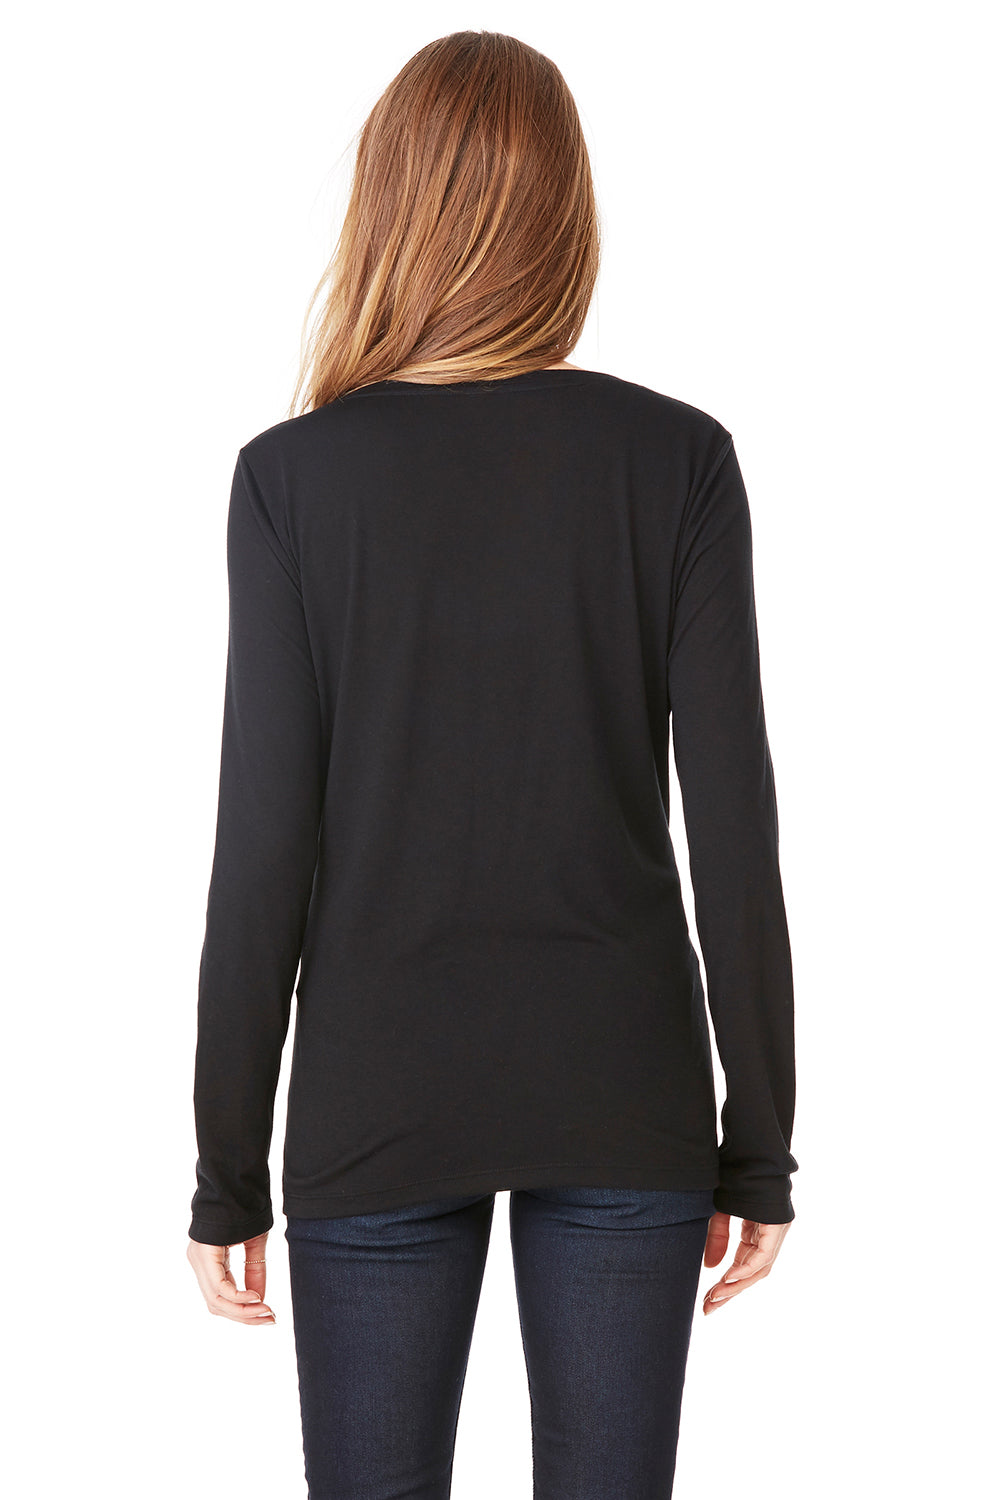 Bella + Canvas 8855 Womens Flowy Long Sleeve V-Neck T-Shirt Black Back